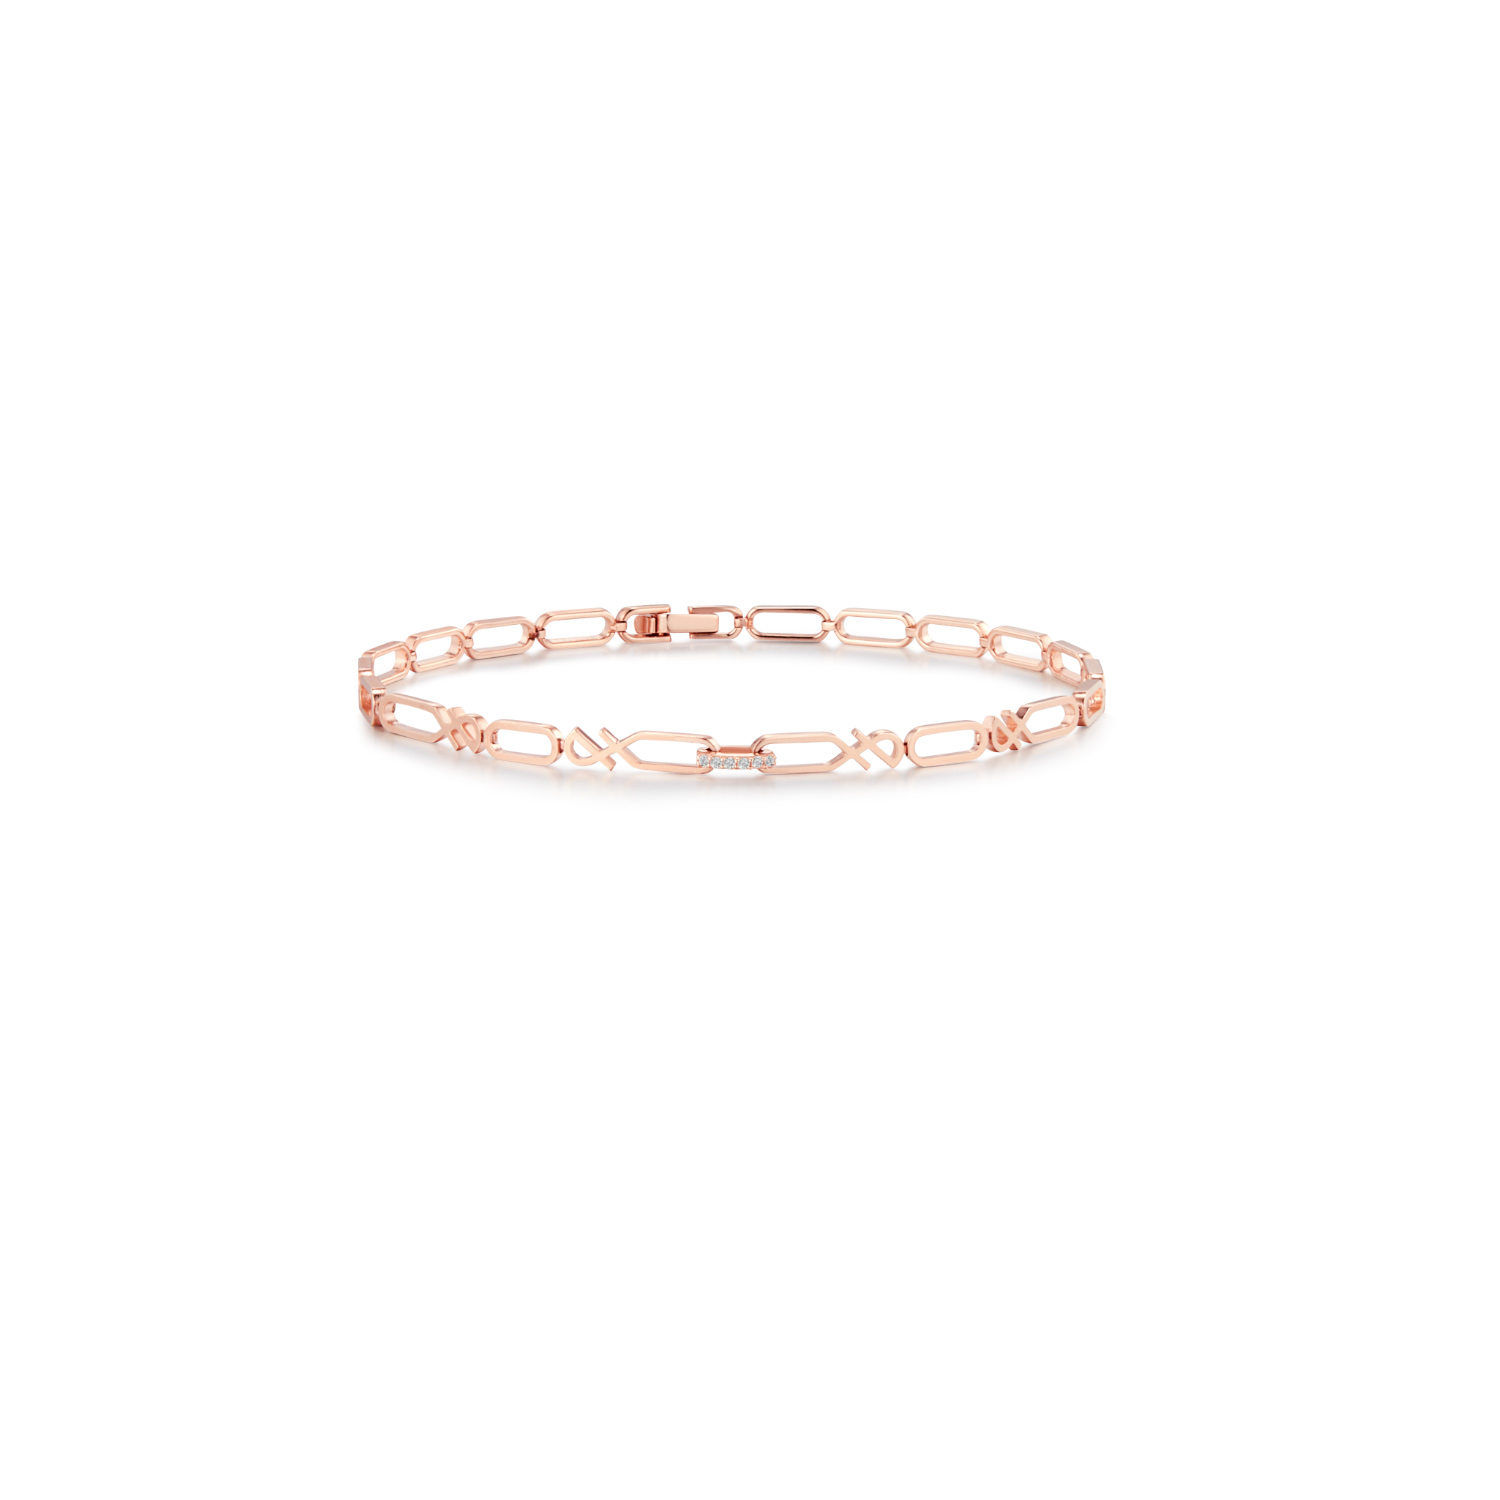 Wholesale OEM/ODM Jewelry OEM bracelet in 14K Rose Gold vermeil silver jewelry suppliers